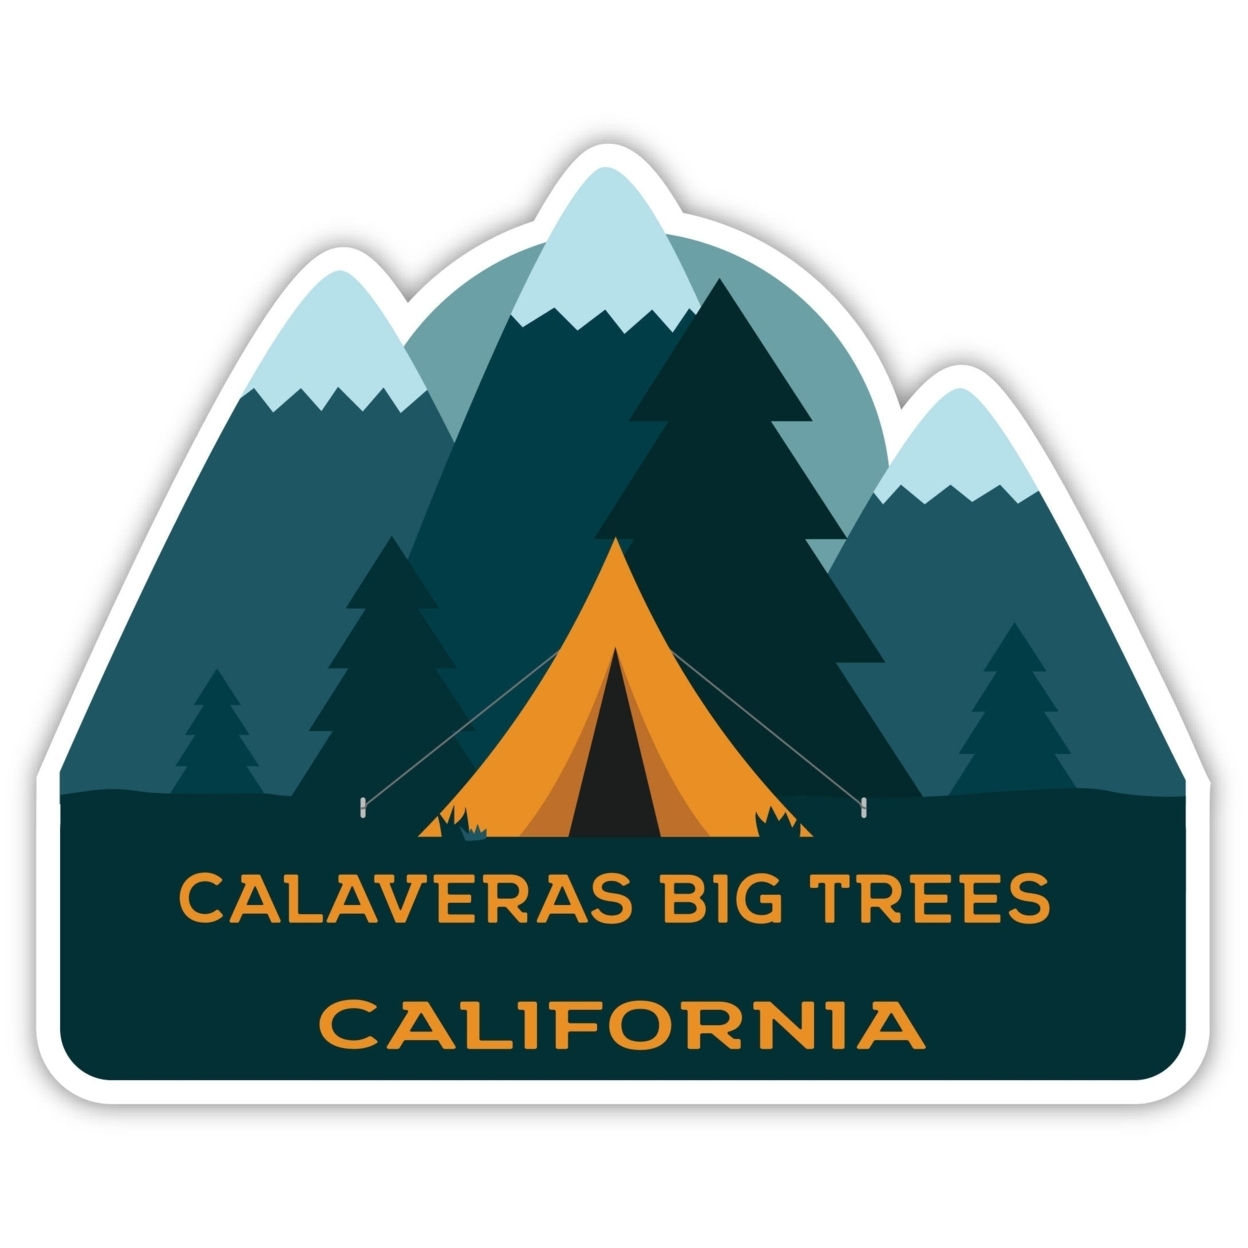 Calaveras Big Trees California Souvenir Decorative Stickers (Choose Theme And Size) - Single Unit, 4-Inch, Camp Life